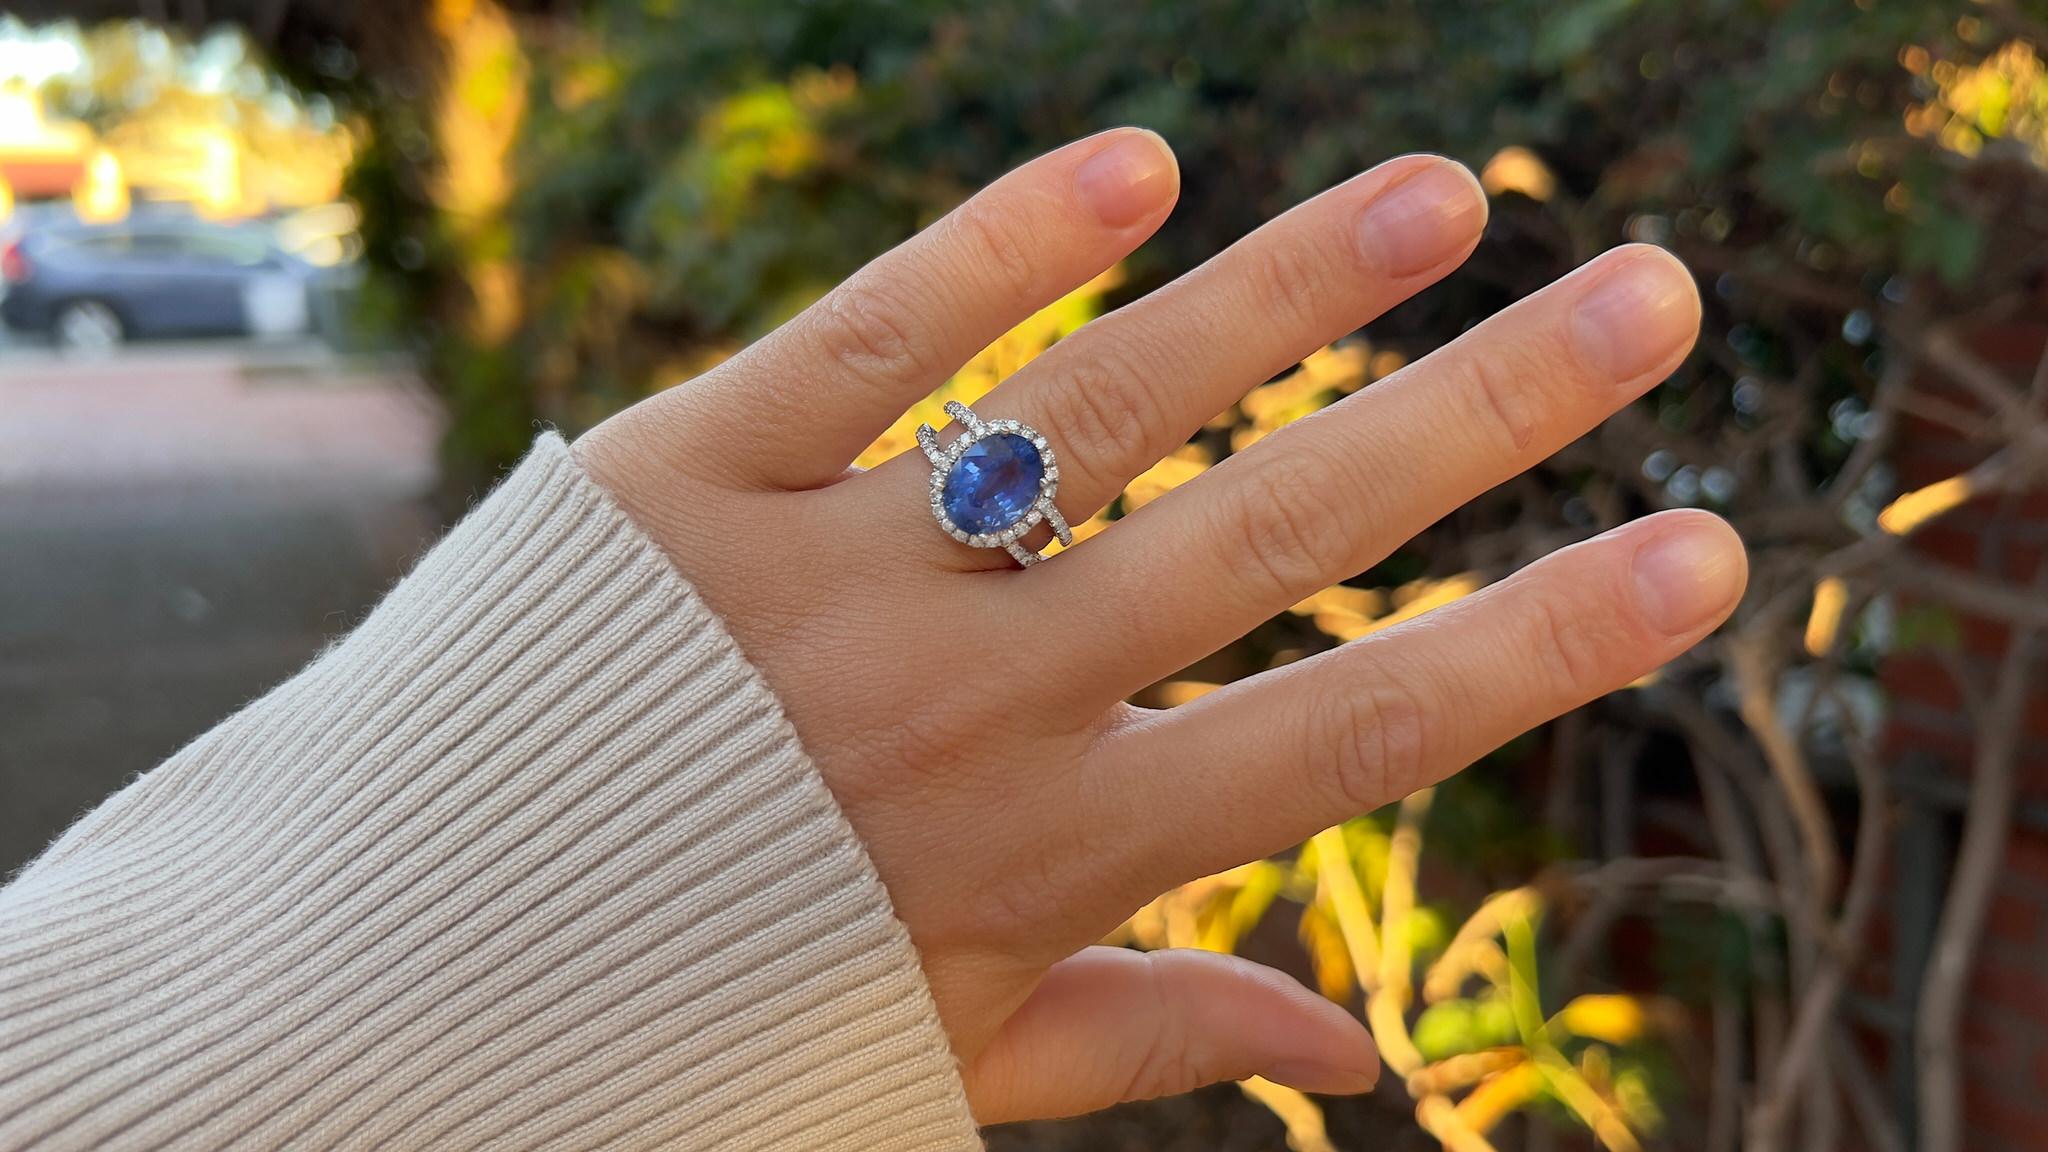 Ceylon Sapphire = 4.50 Carat
(Cut: Oval, Color: Blue, Origin: Natural)
Diamond = 1.10 Carats
(Cut: Round, Emerald, Color: F, Clarity: VS)
Metal = 18K White Gold
Ring Size = 6.5